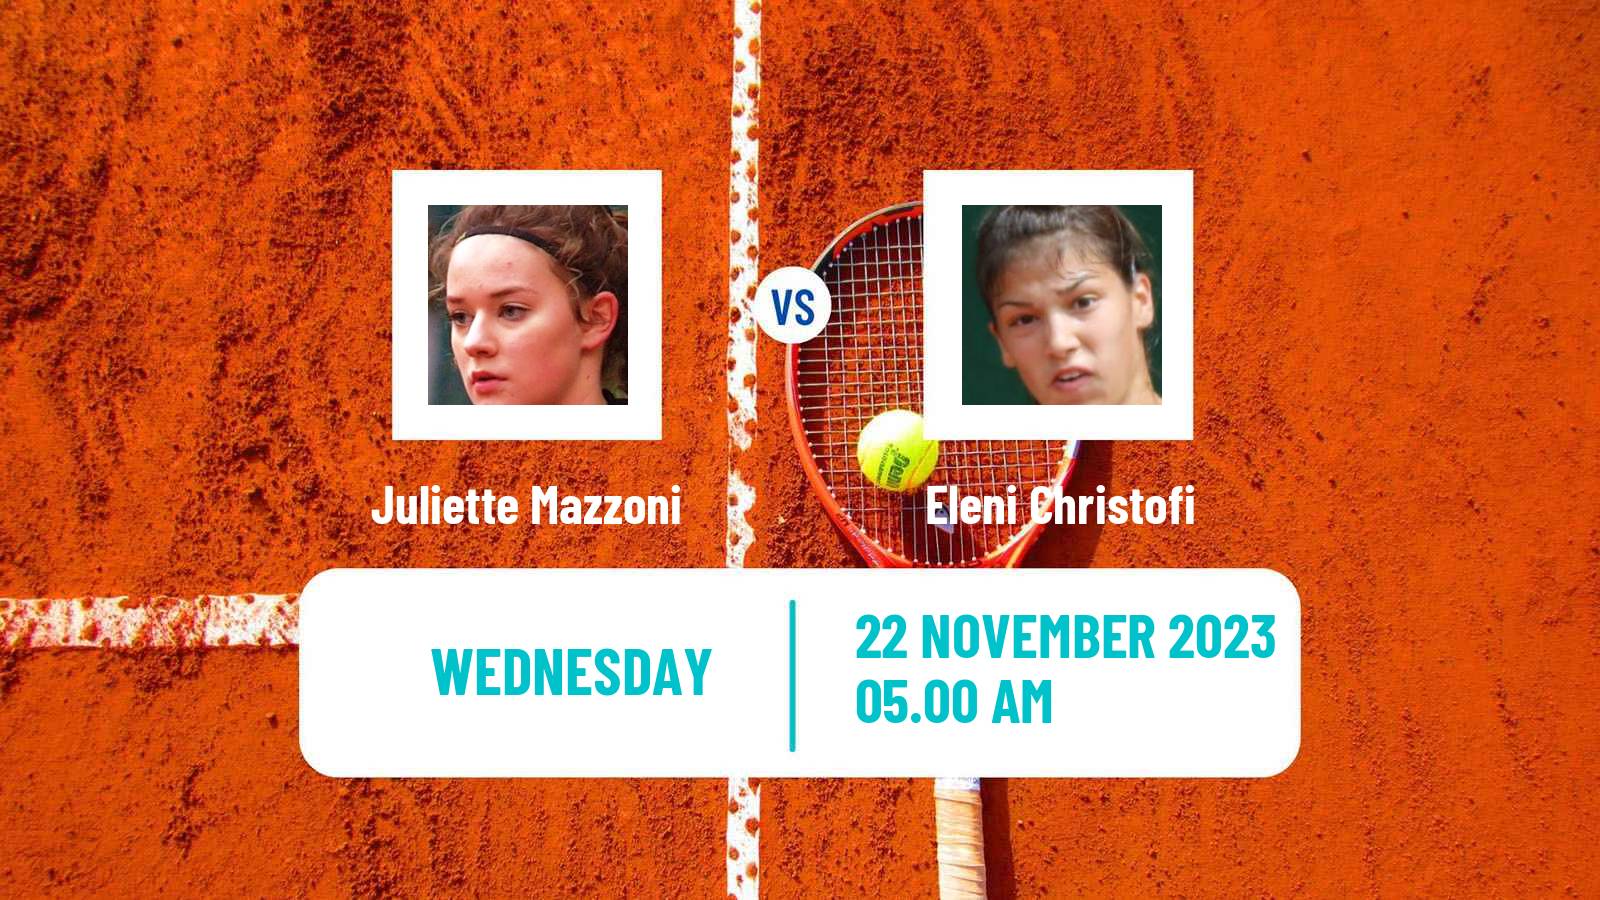 Tennis ITF W15 Heraklion 4 Women Juliette Mazzoni - Eleni Christofi